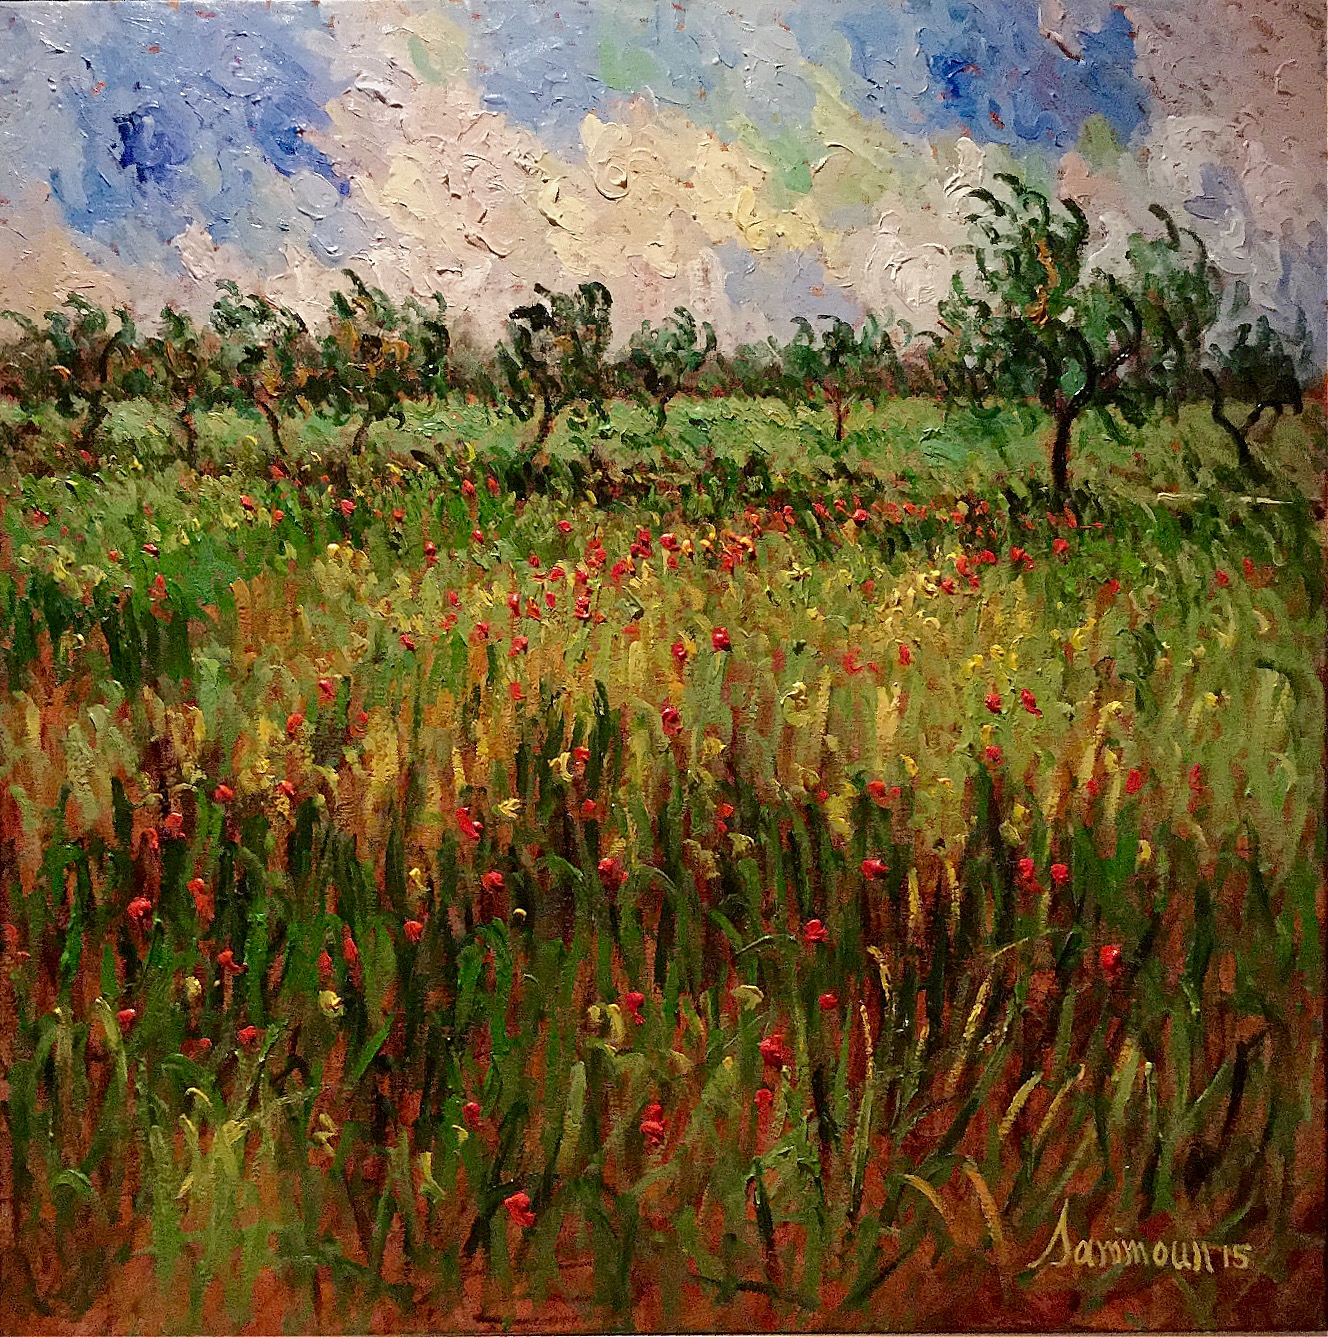 SAMIR SAMMOUN - Olive Trees and Poppy Fields - Oil on Canvas - 40x40 inches